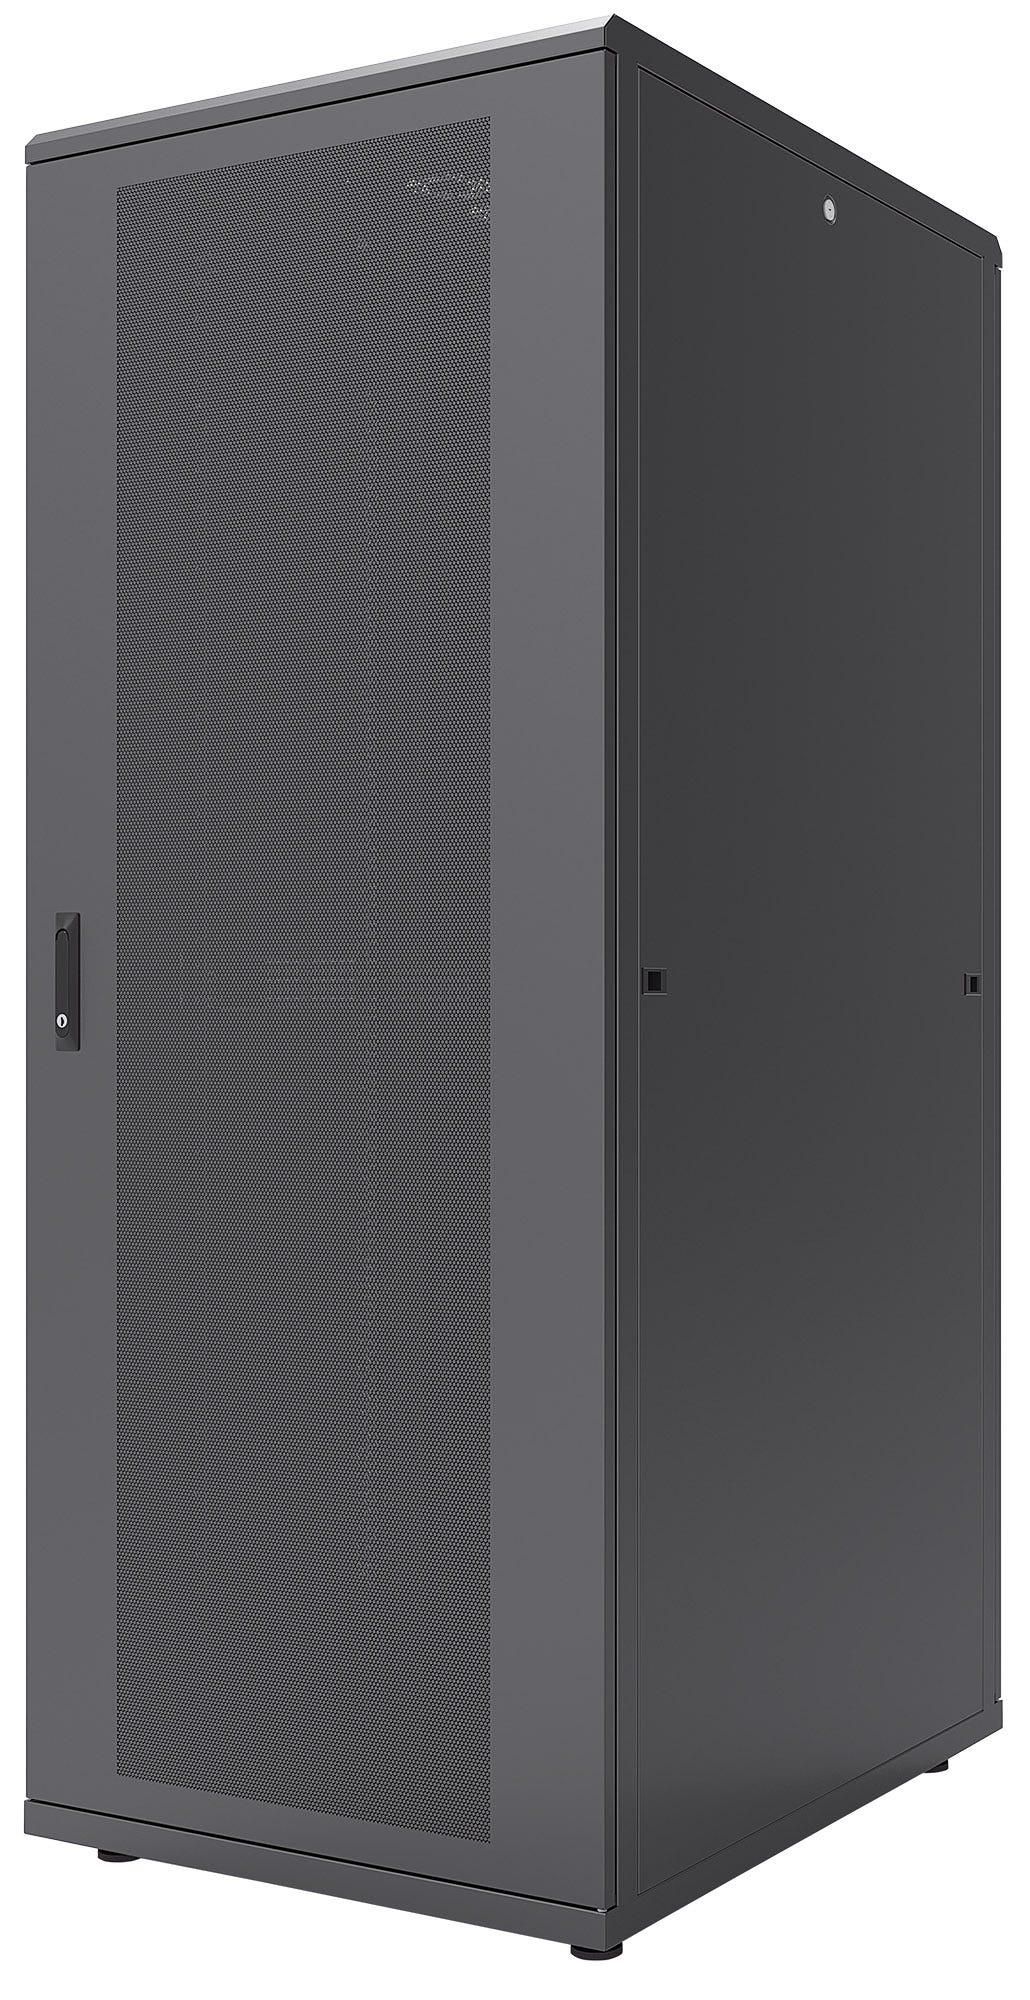 Intellinet 714105 19 Server Cabinet, 47U 